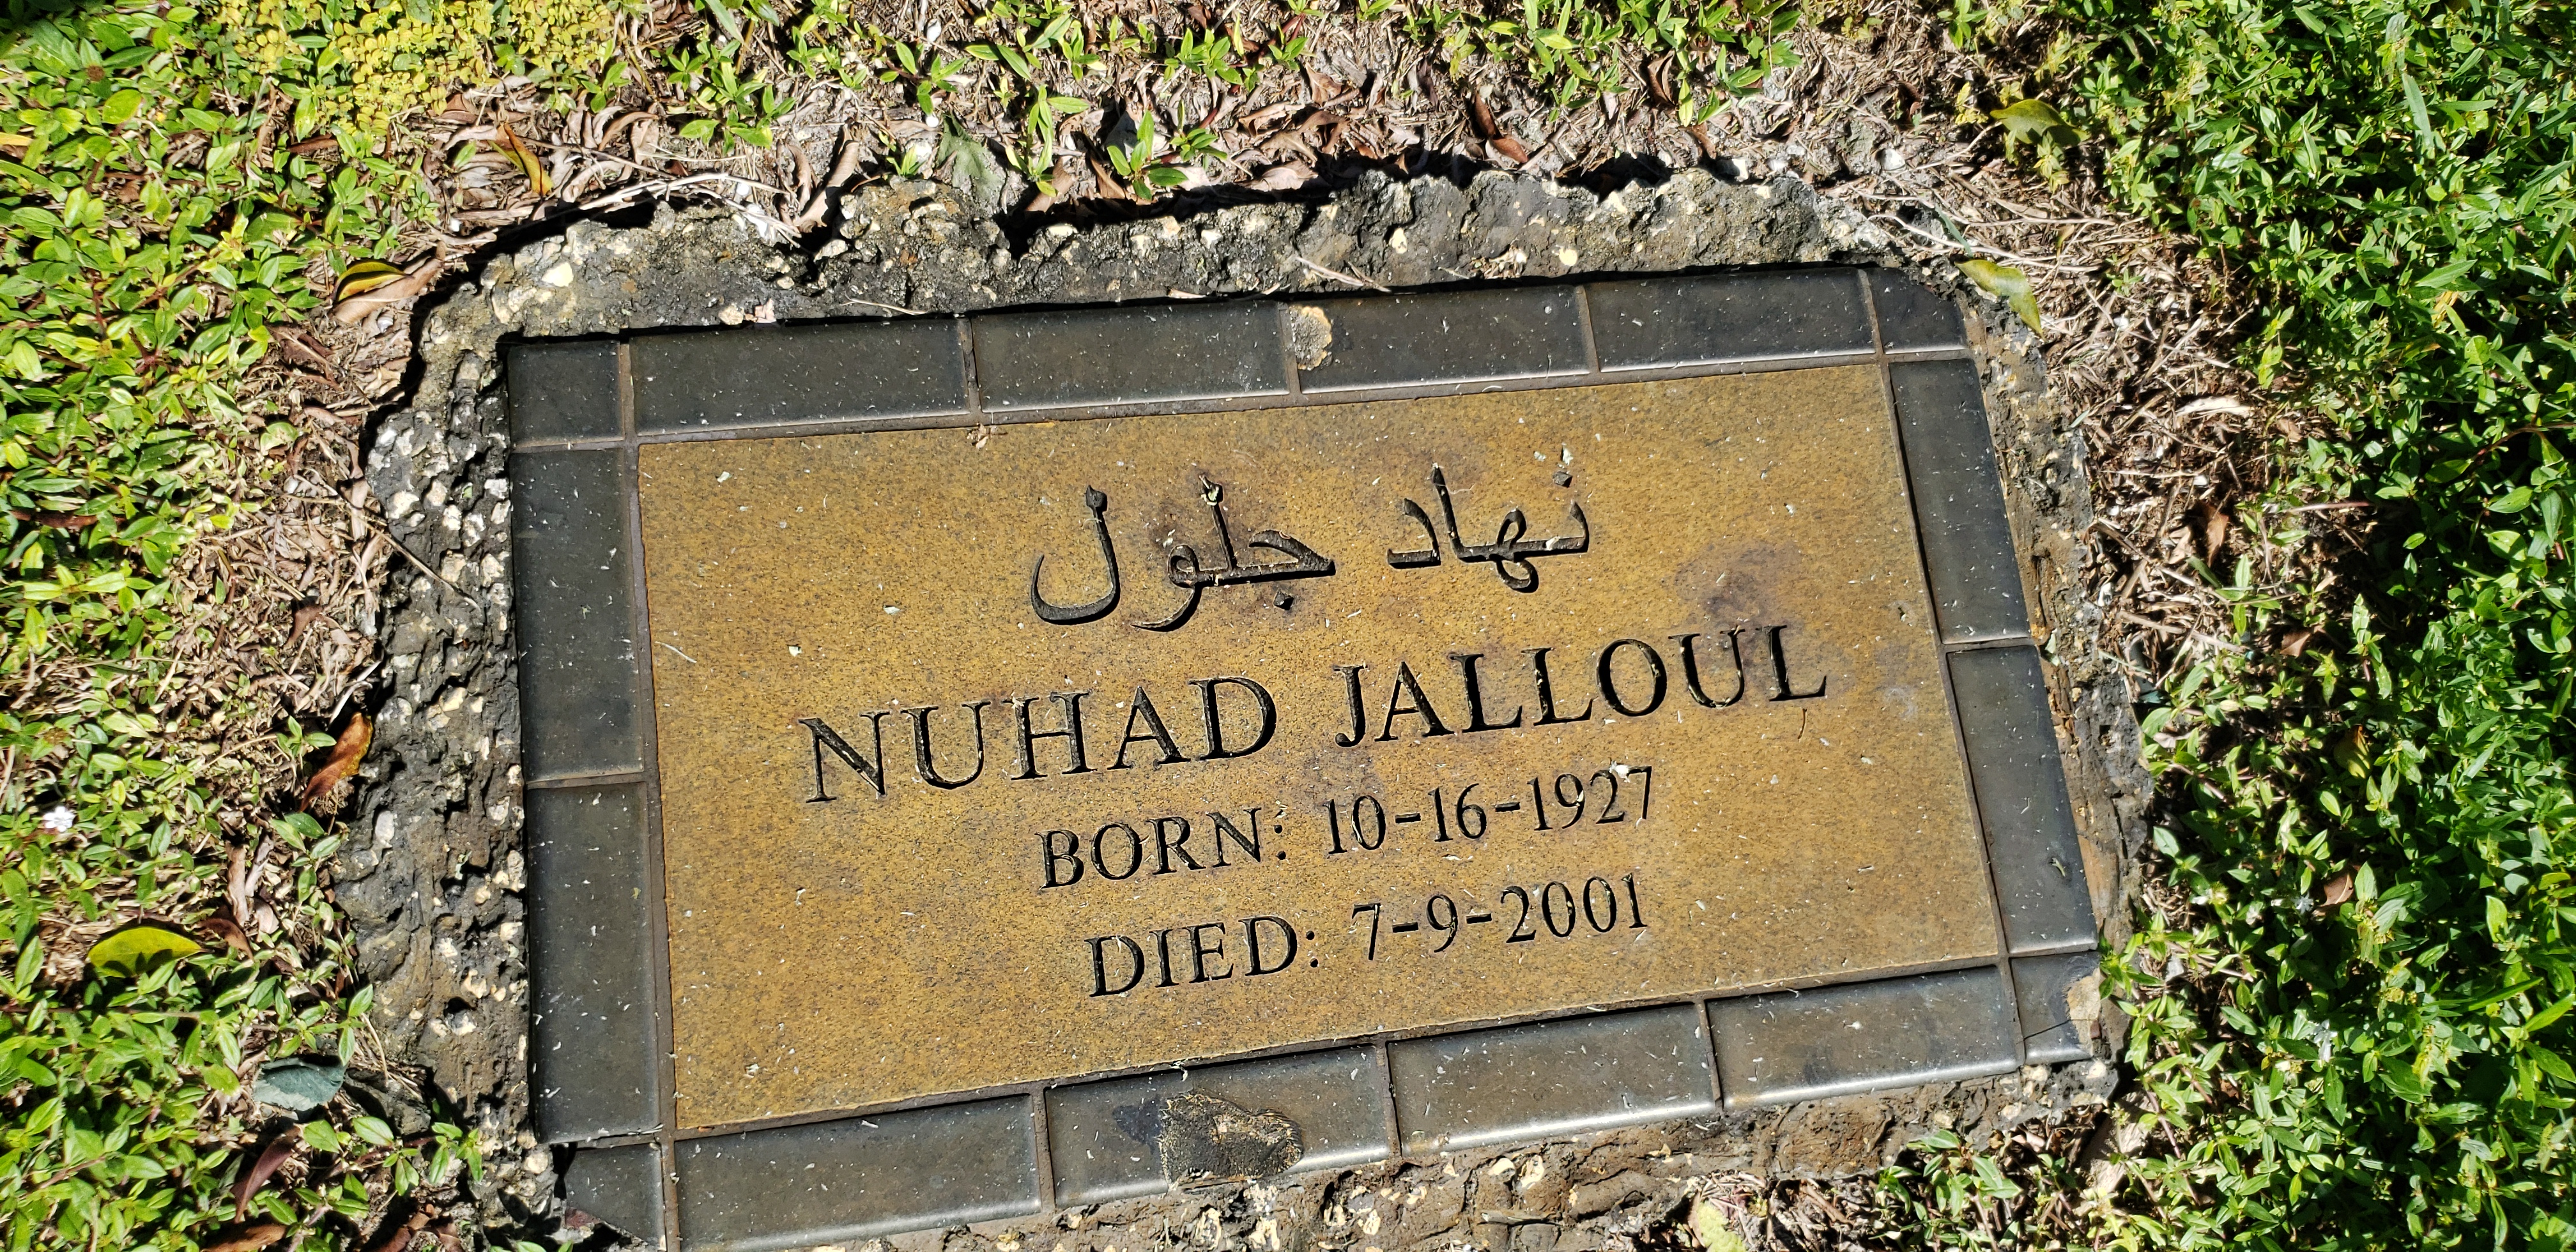 Nuhad Jalloul